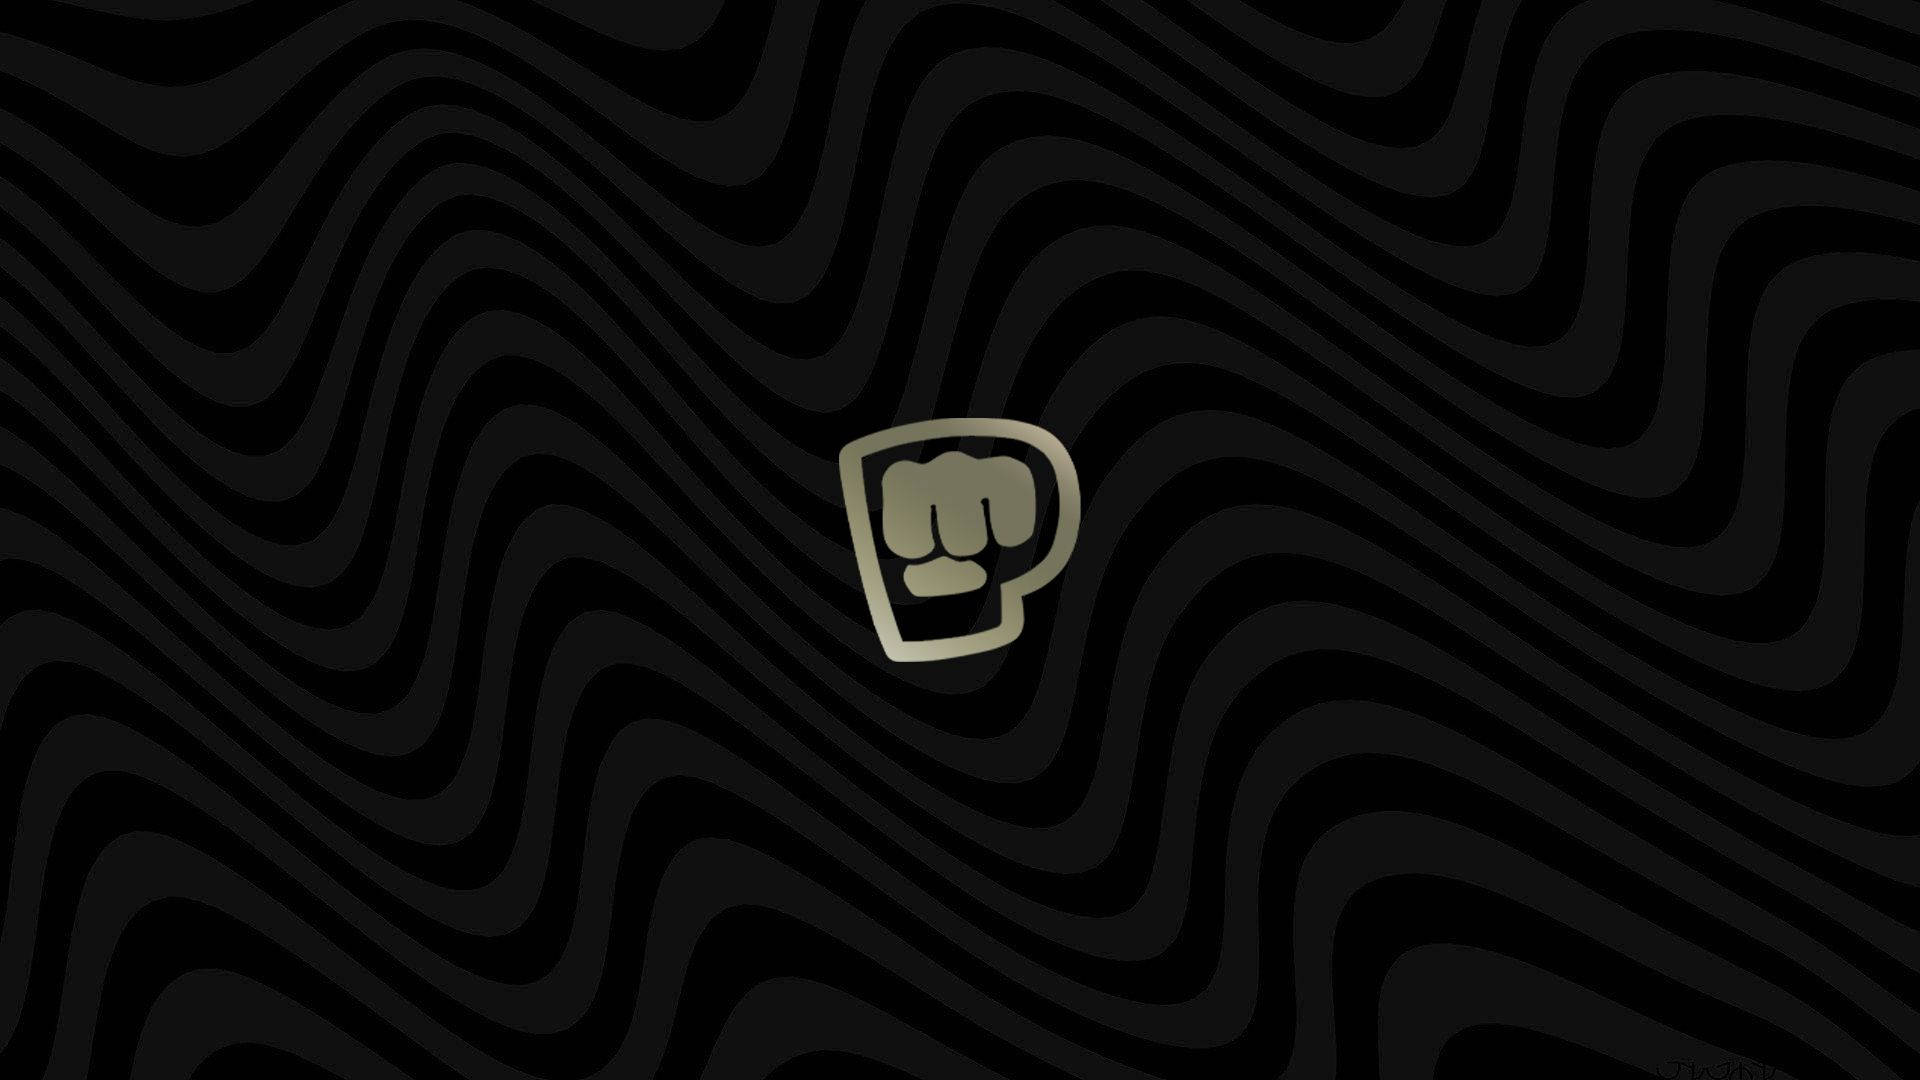 Pewdiepie's Iconic Brofist Logo Background